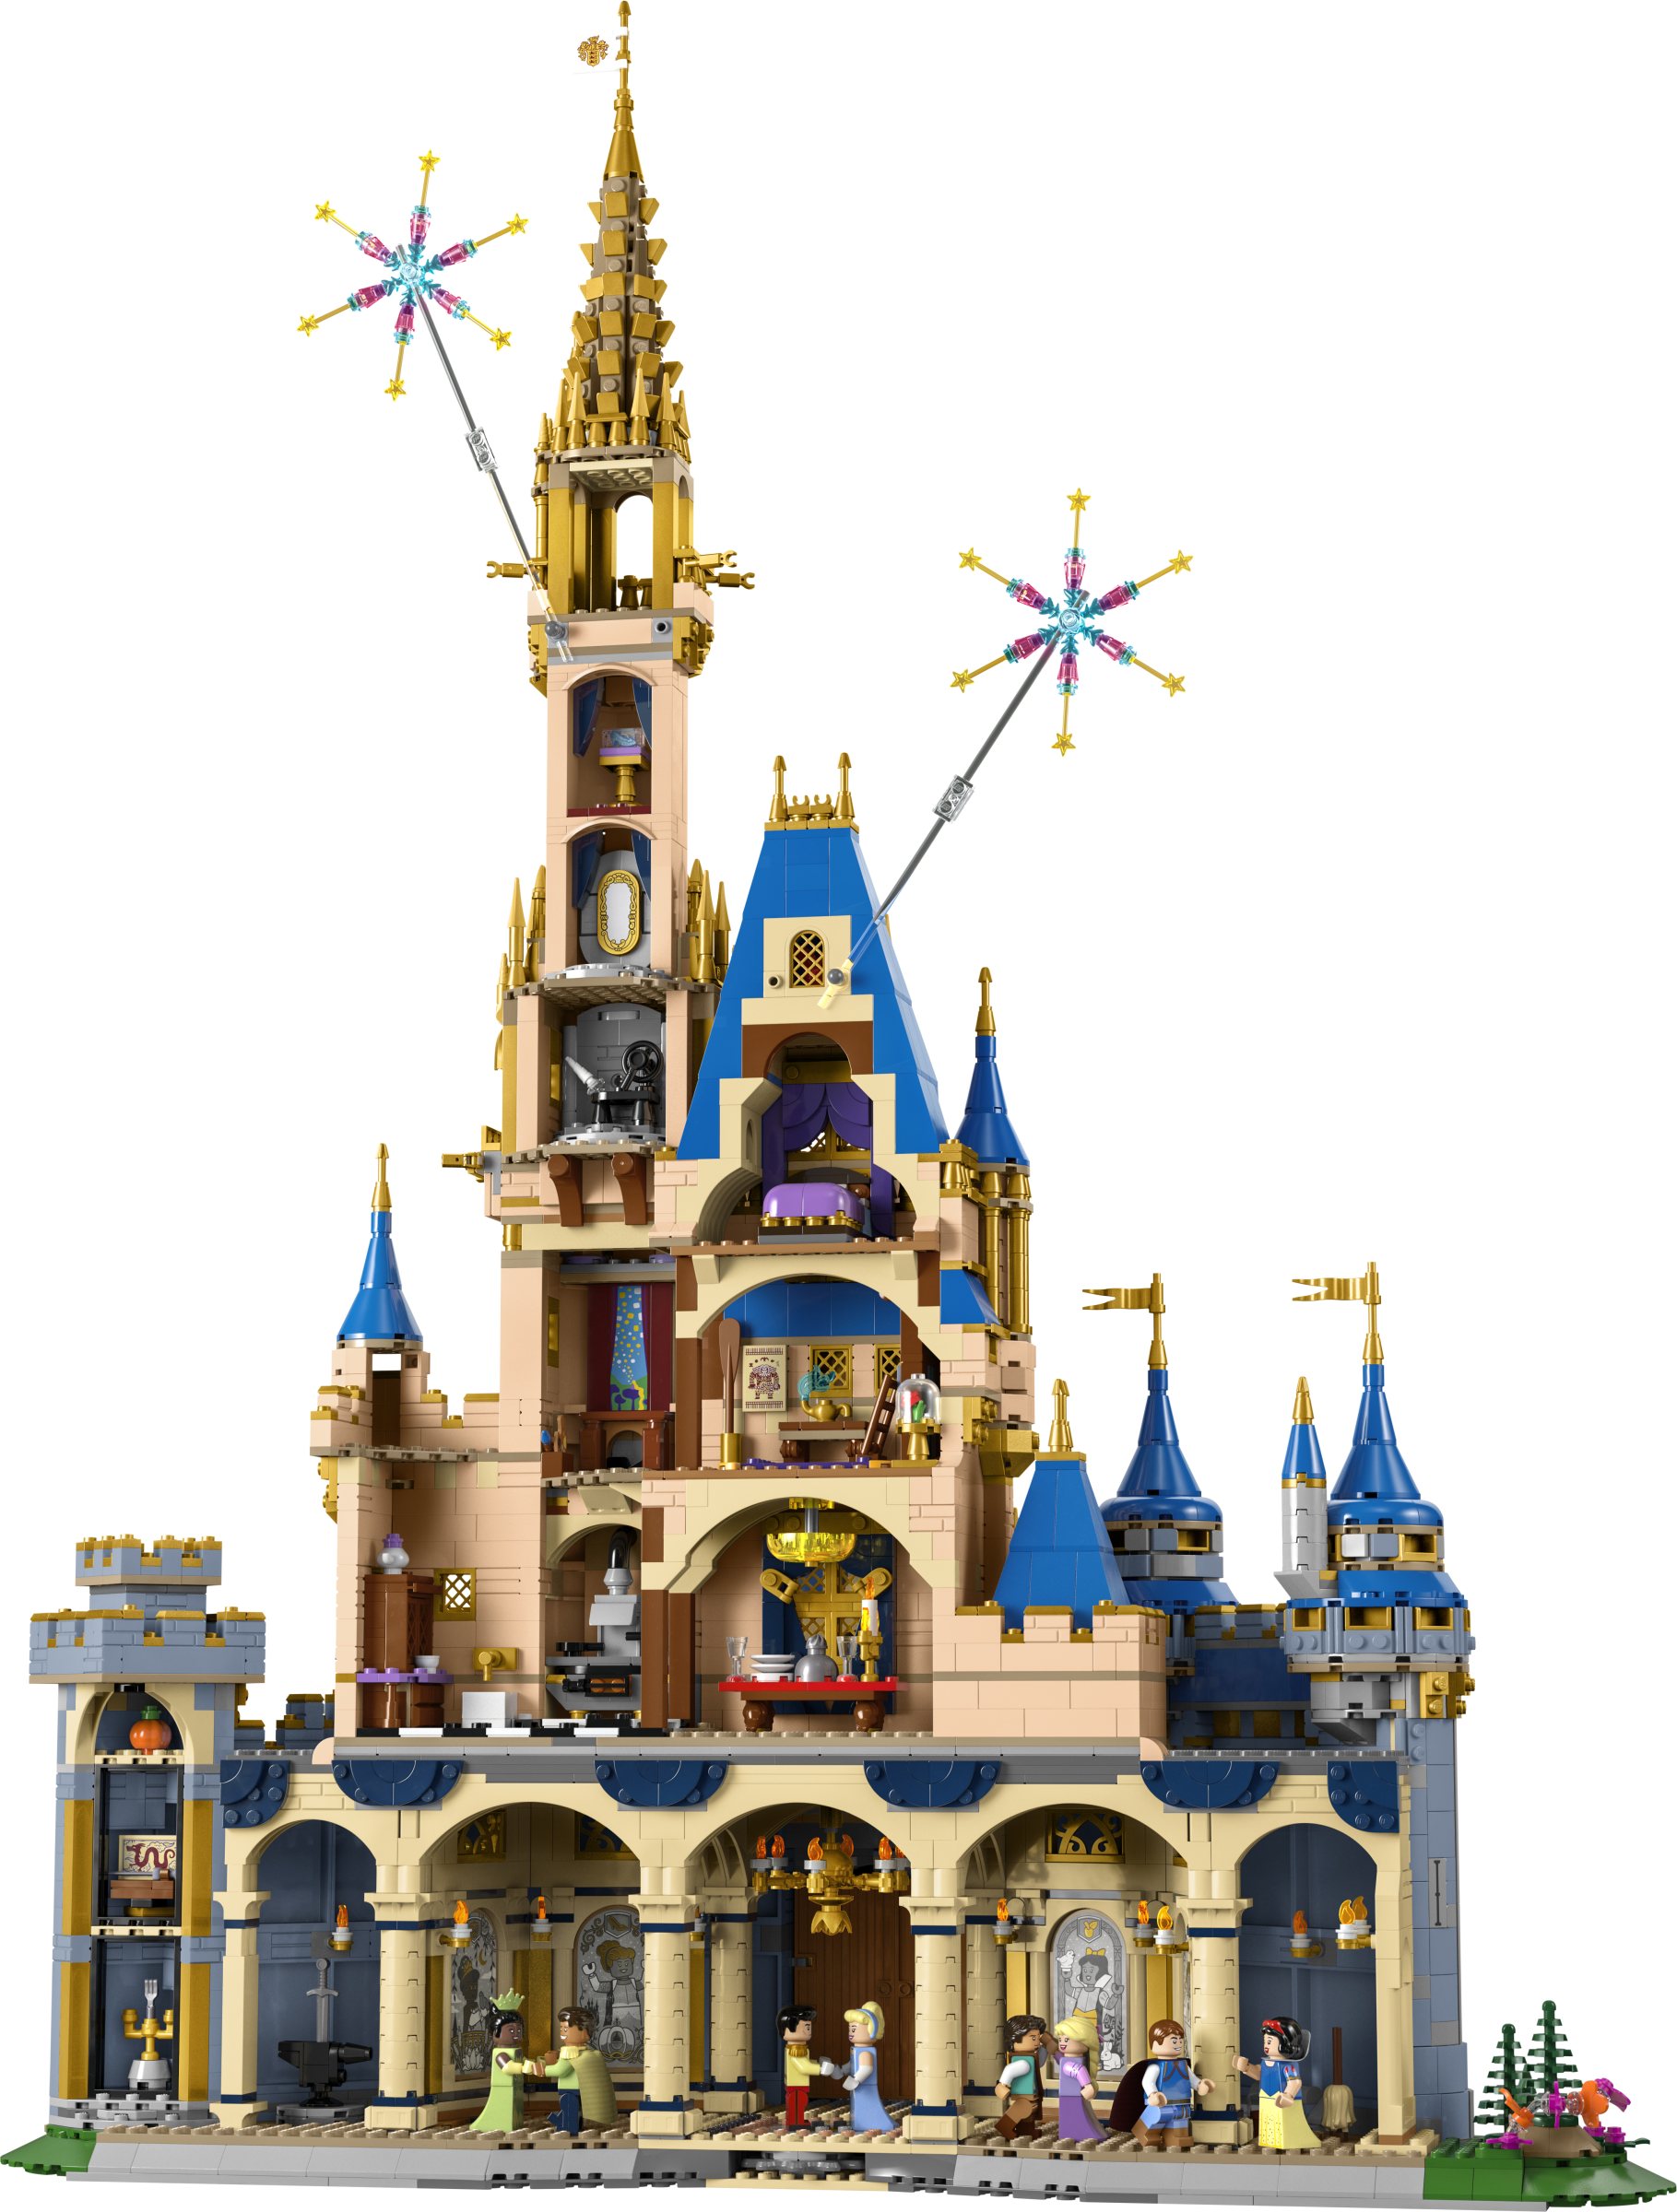 Disneyland Paris Celebrates Disney's 100th anniversary With Ceremony  Featuring 100 Disney Characters in Front of Sleeping Beauty Castle! -  DisneylandParis News